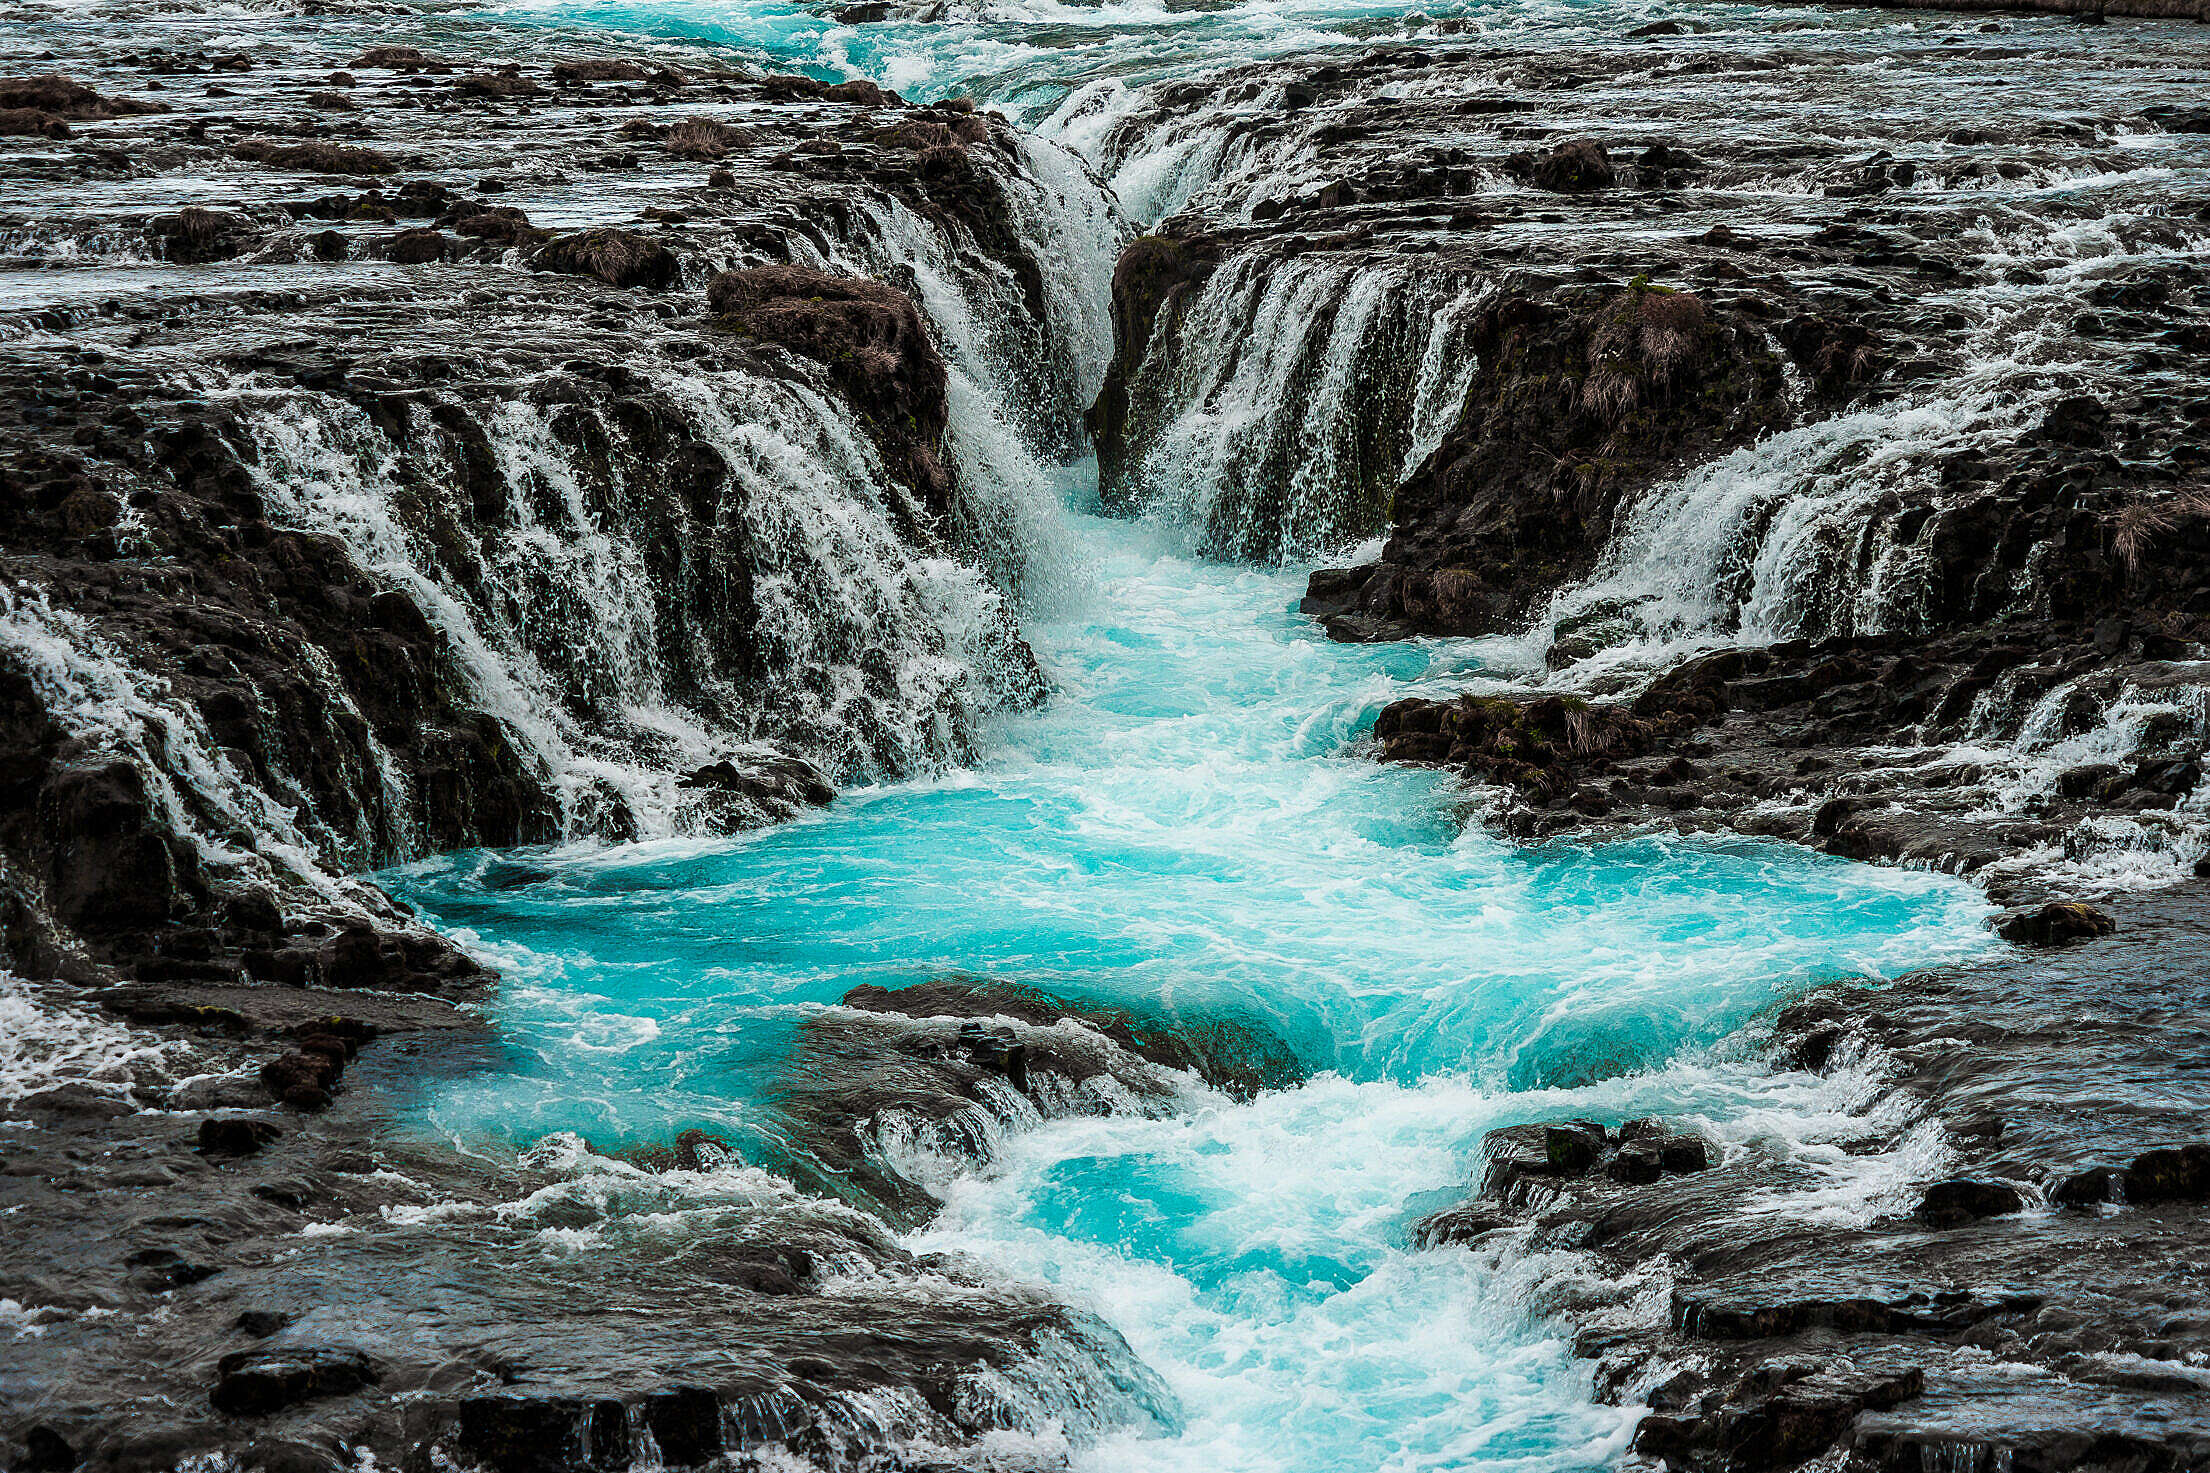 Bruarfoss Beautiful Blue Waterfall in Iceland Free Stock Photo